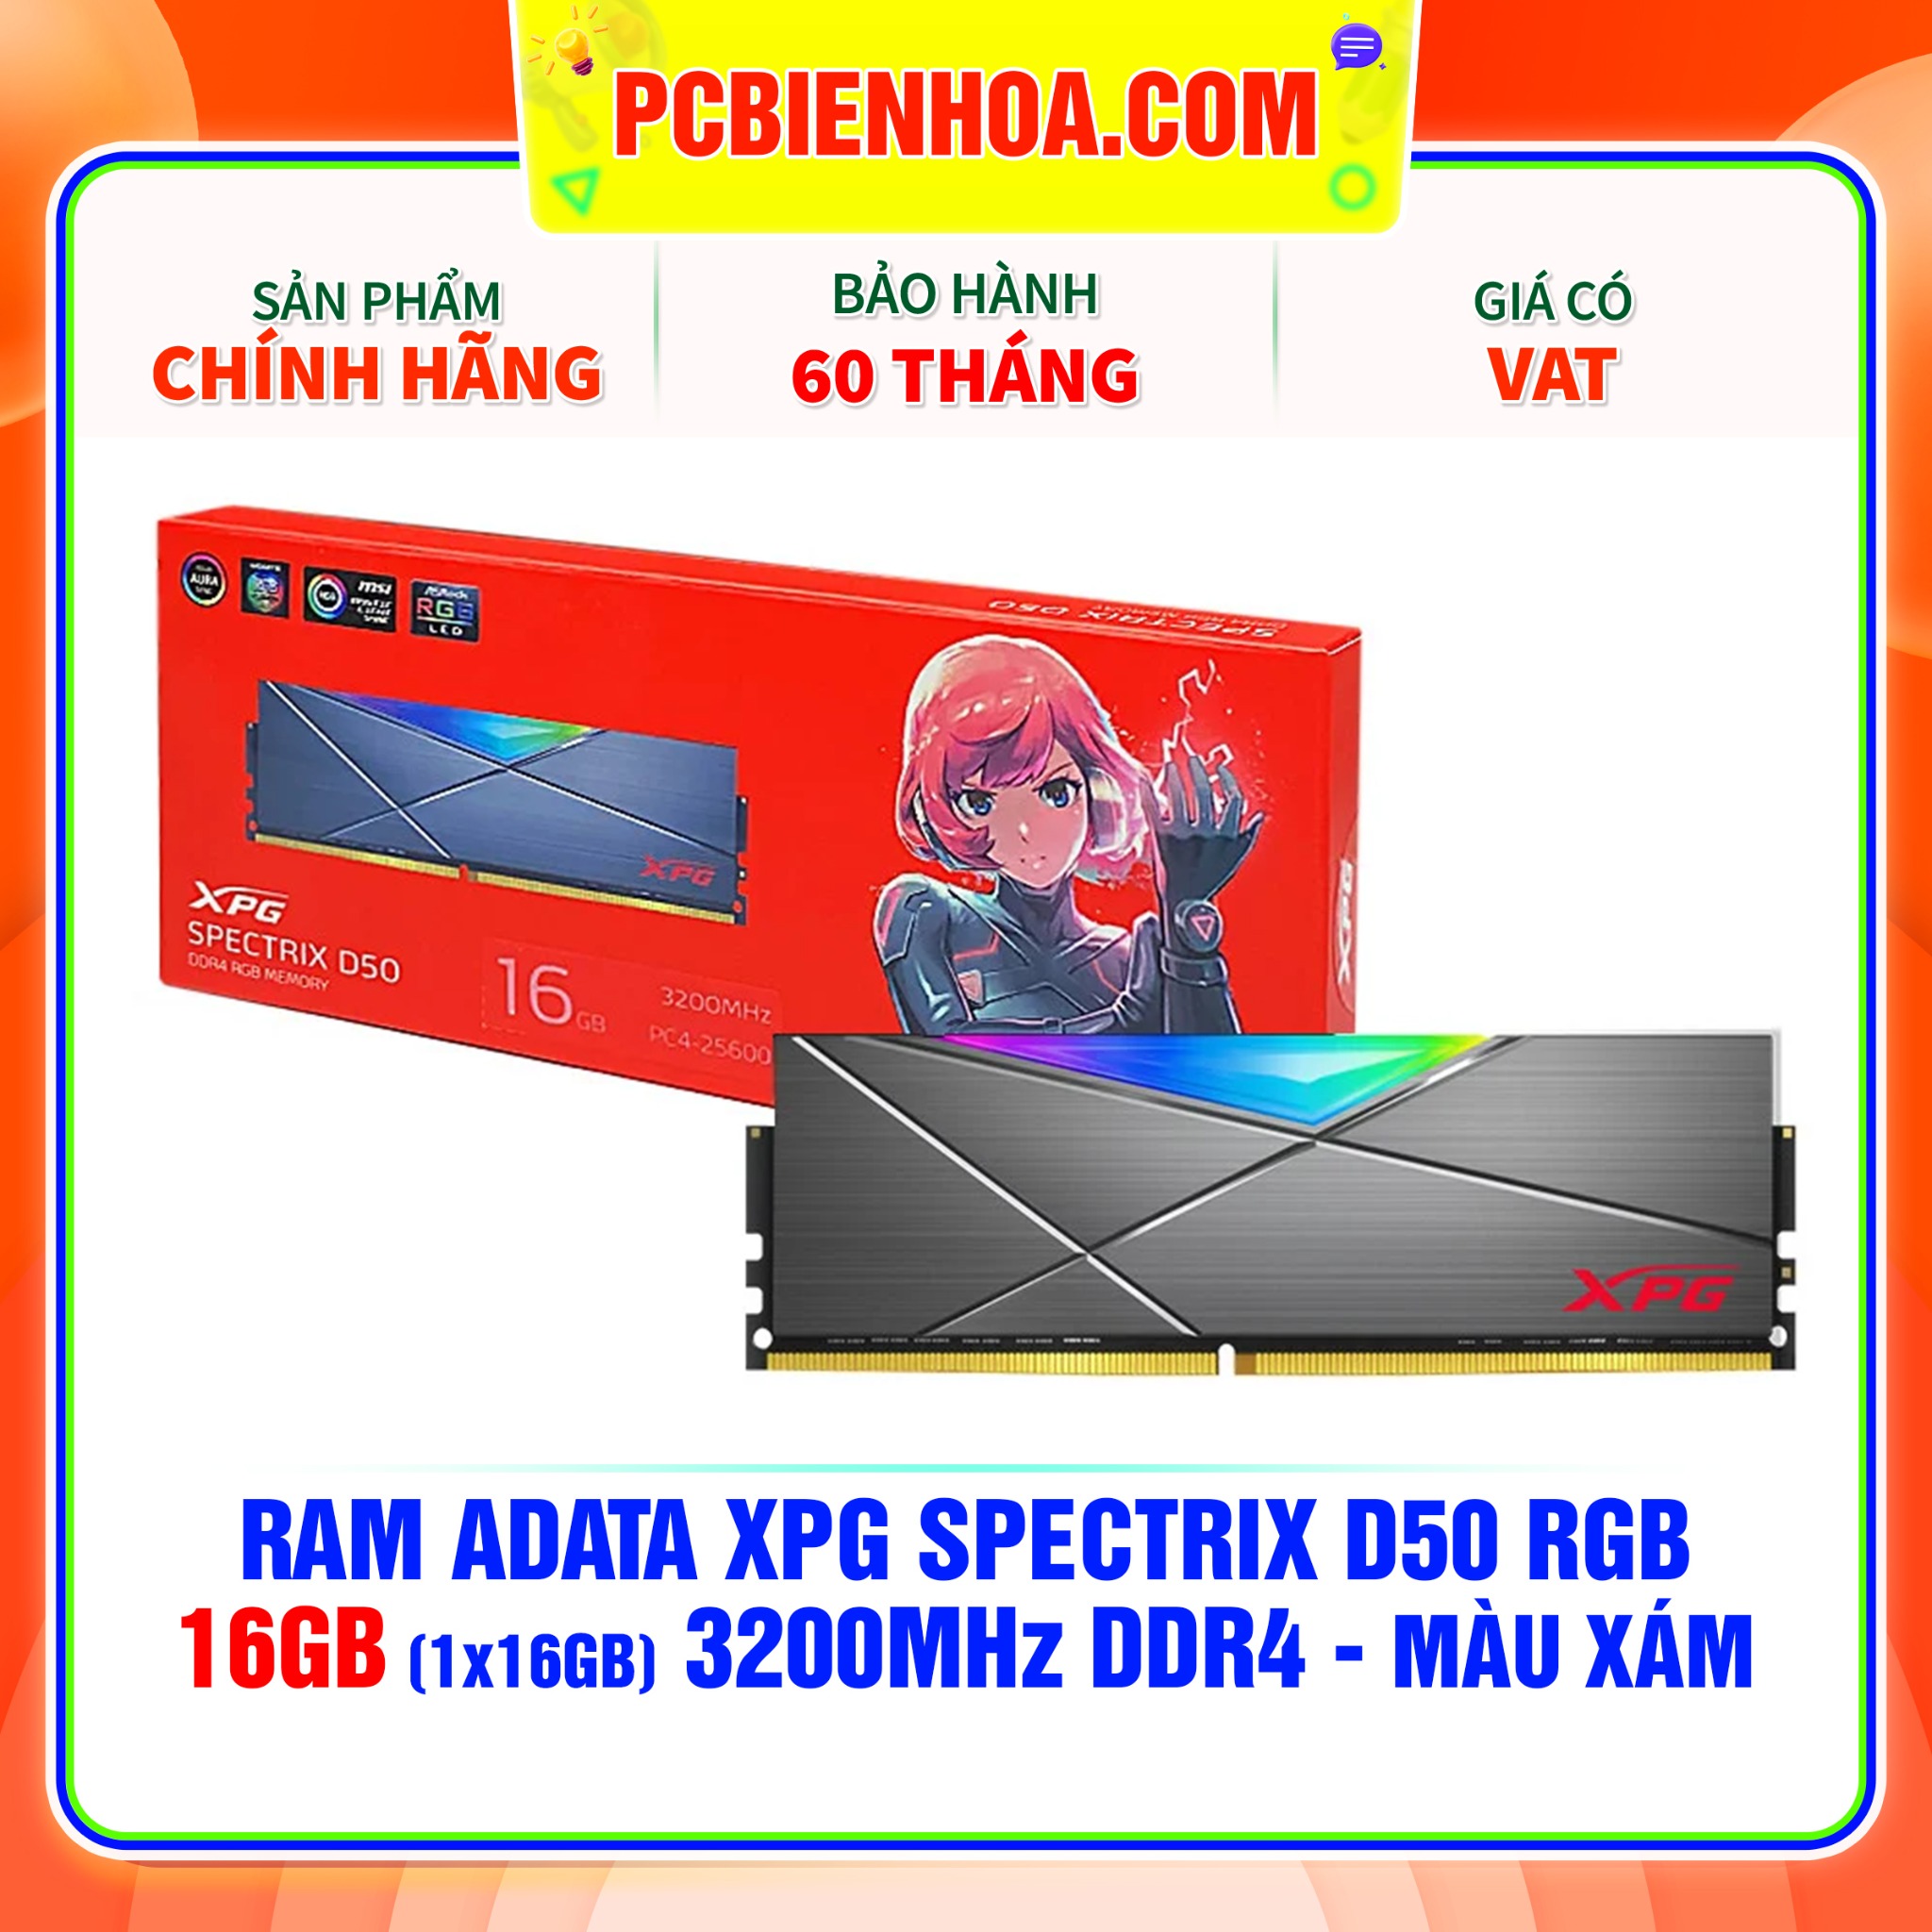 RAM ADATA XPG SPECTRIX D50 RGB - 16GB 3200MHZ DDR4 - MÀU XÁM